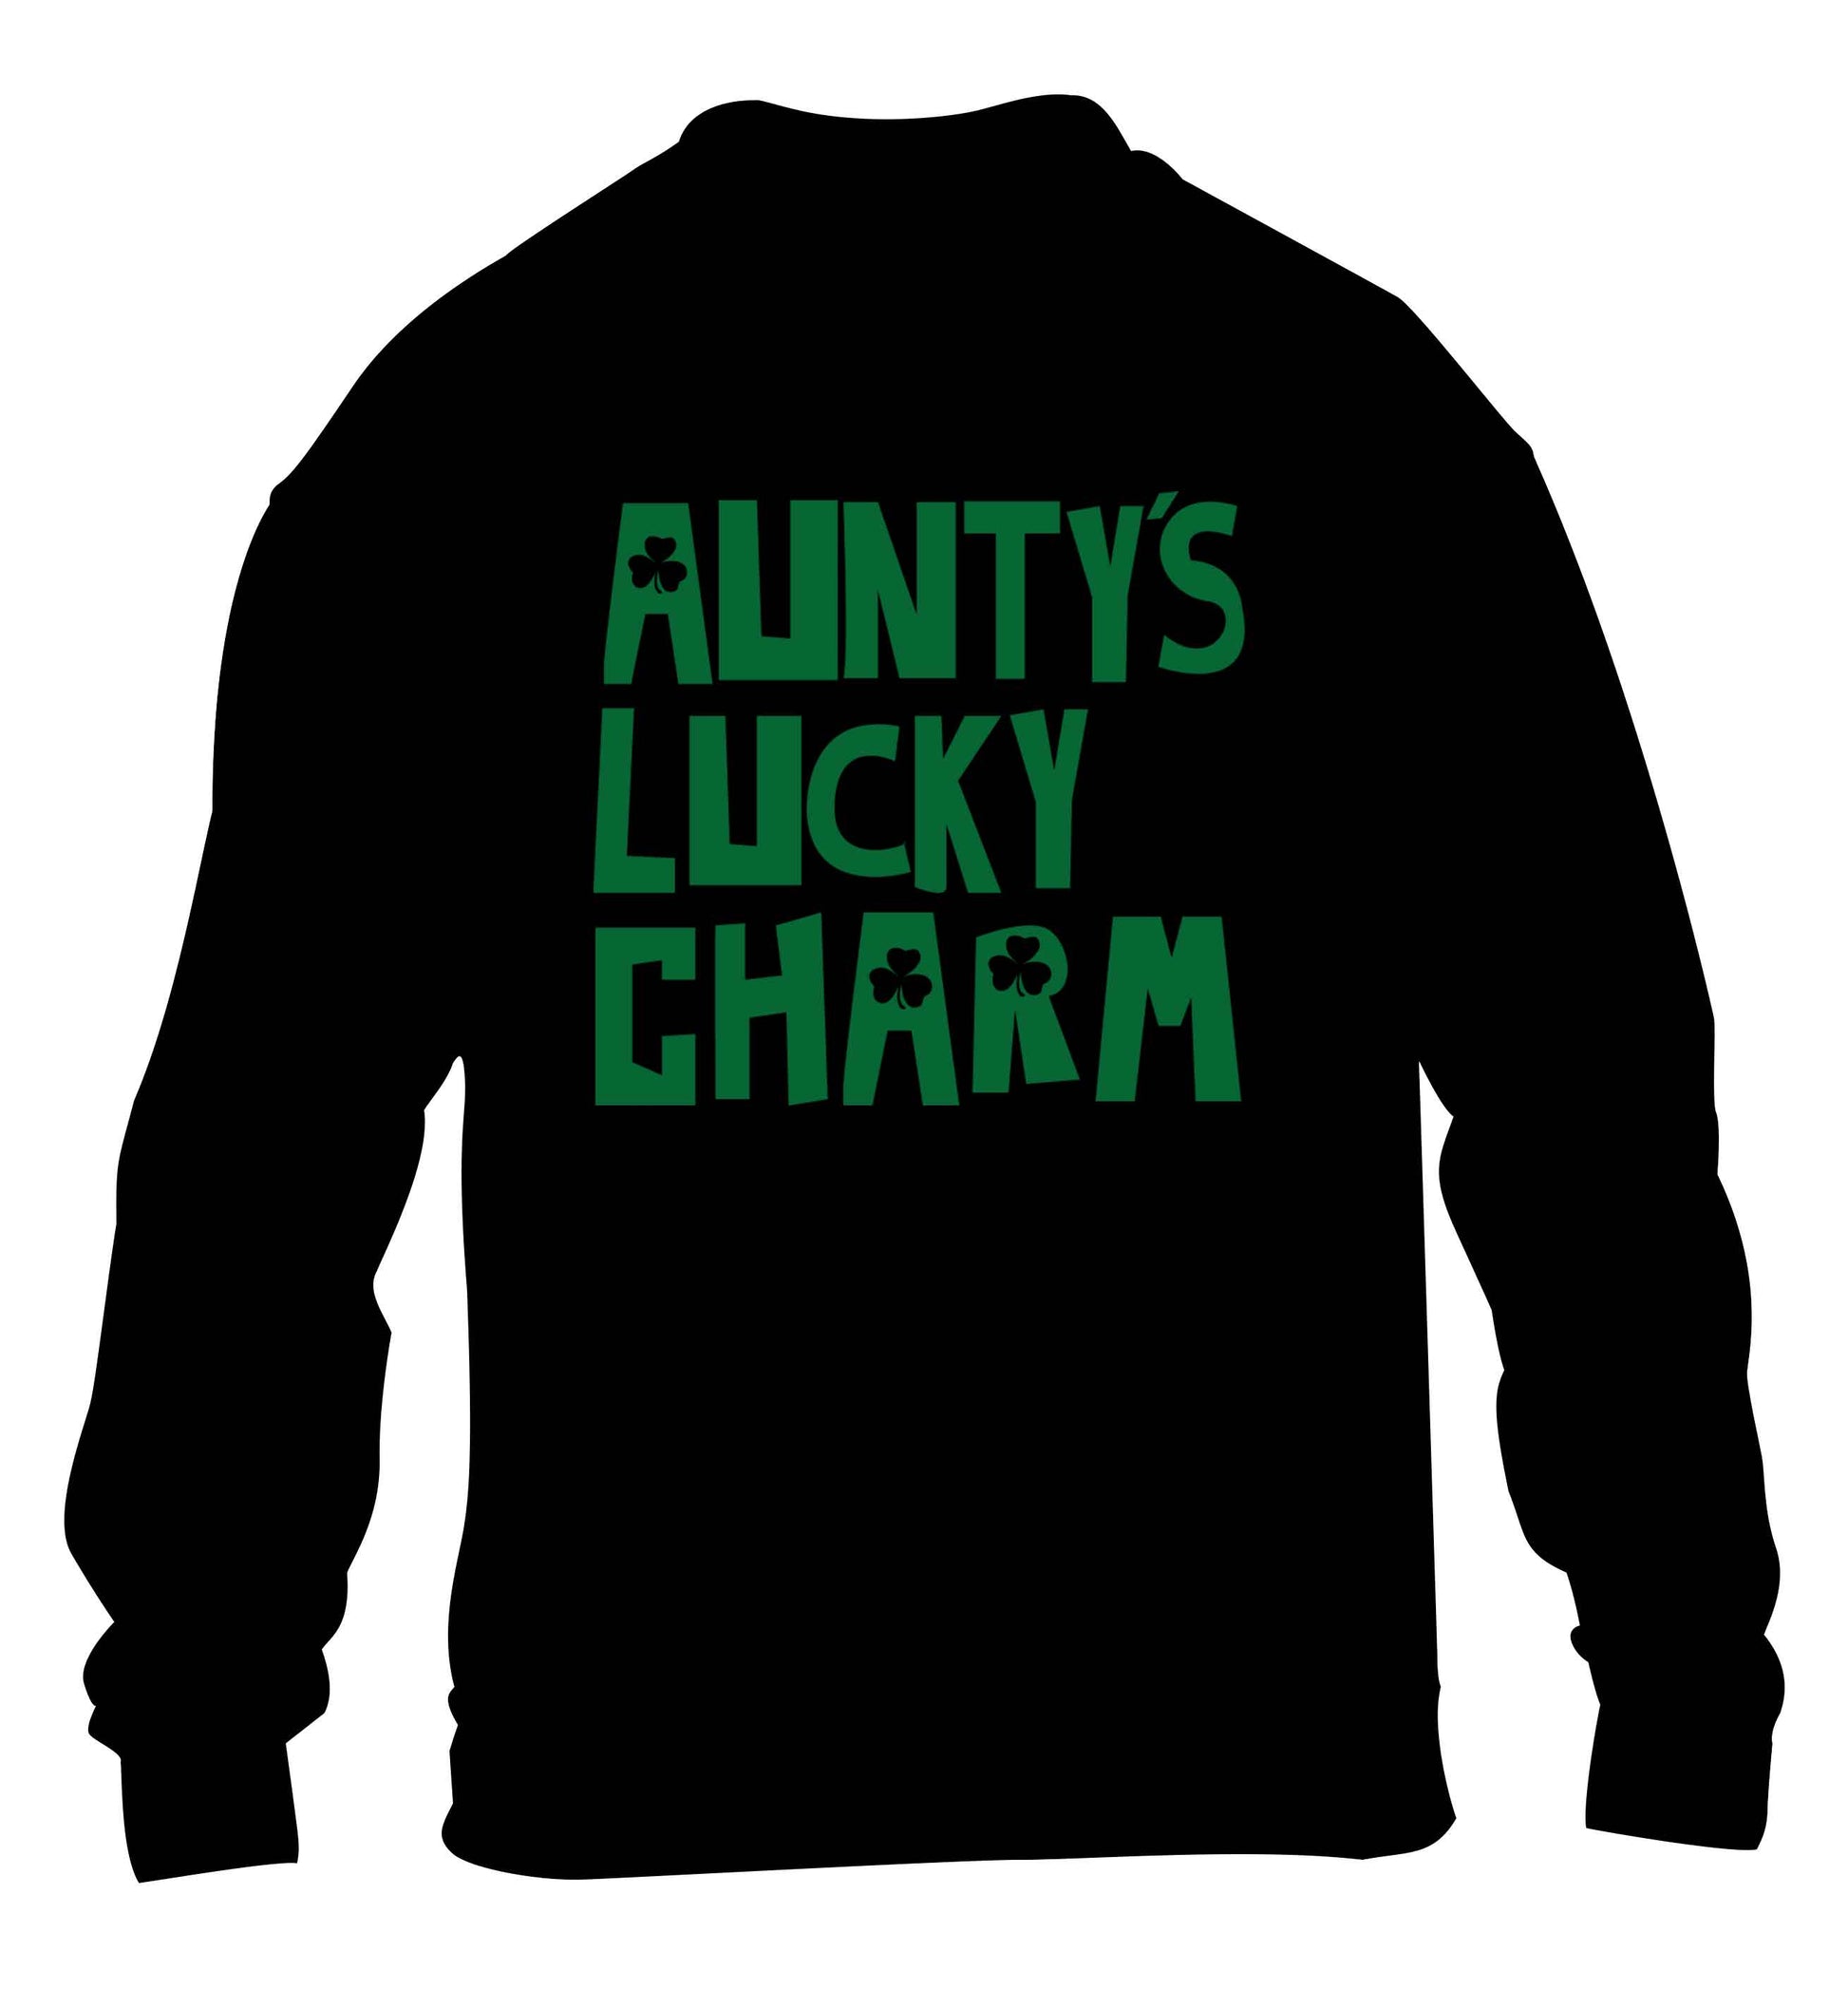 Aunty's lucky charm children's black sweater 12-13 Years